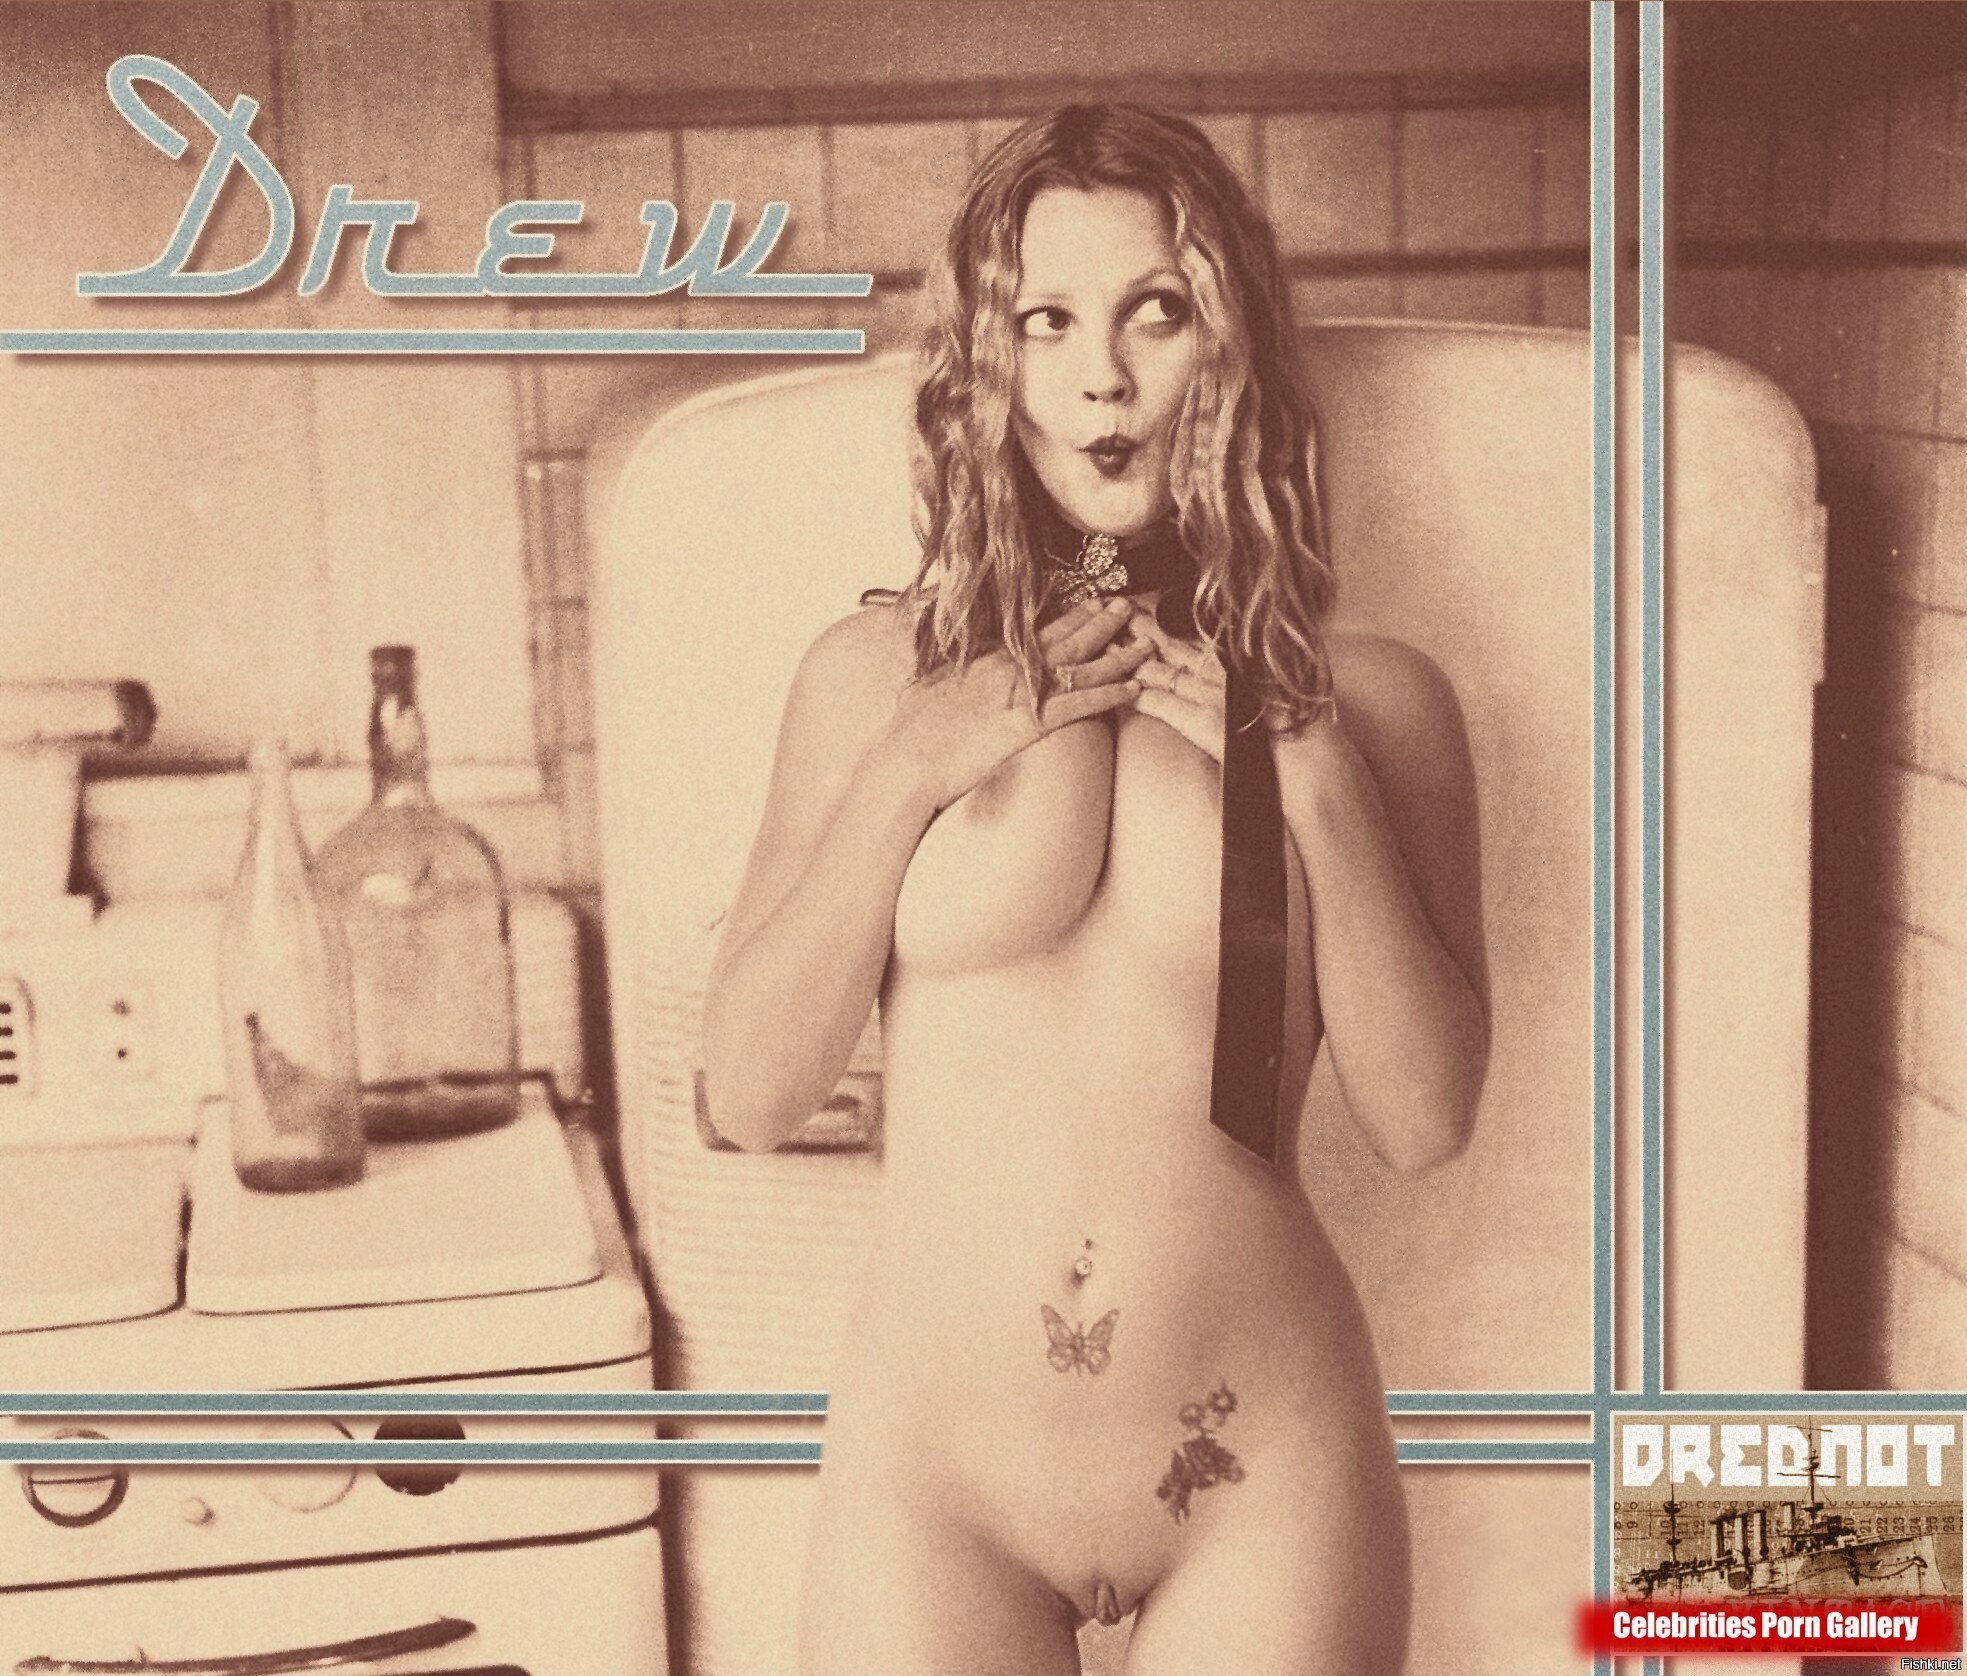 Drew Barrymore nude xxx photo photos Gallery.